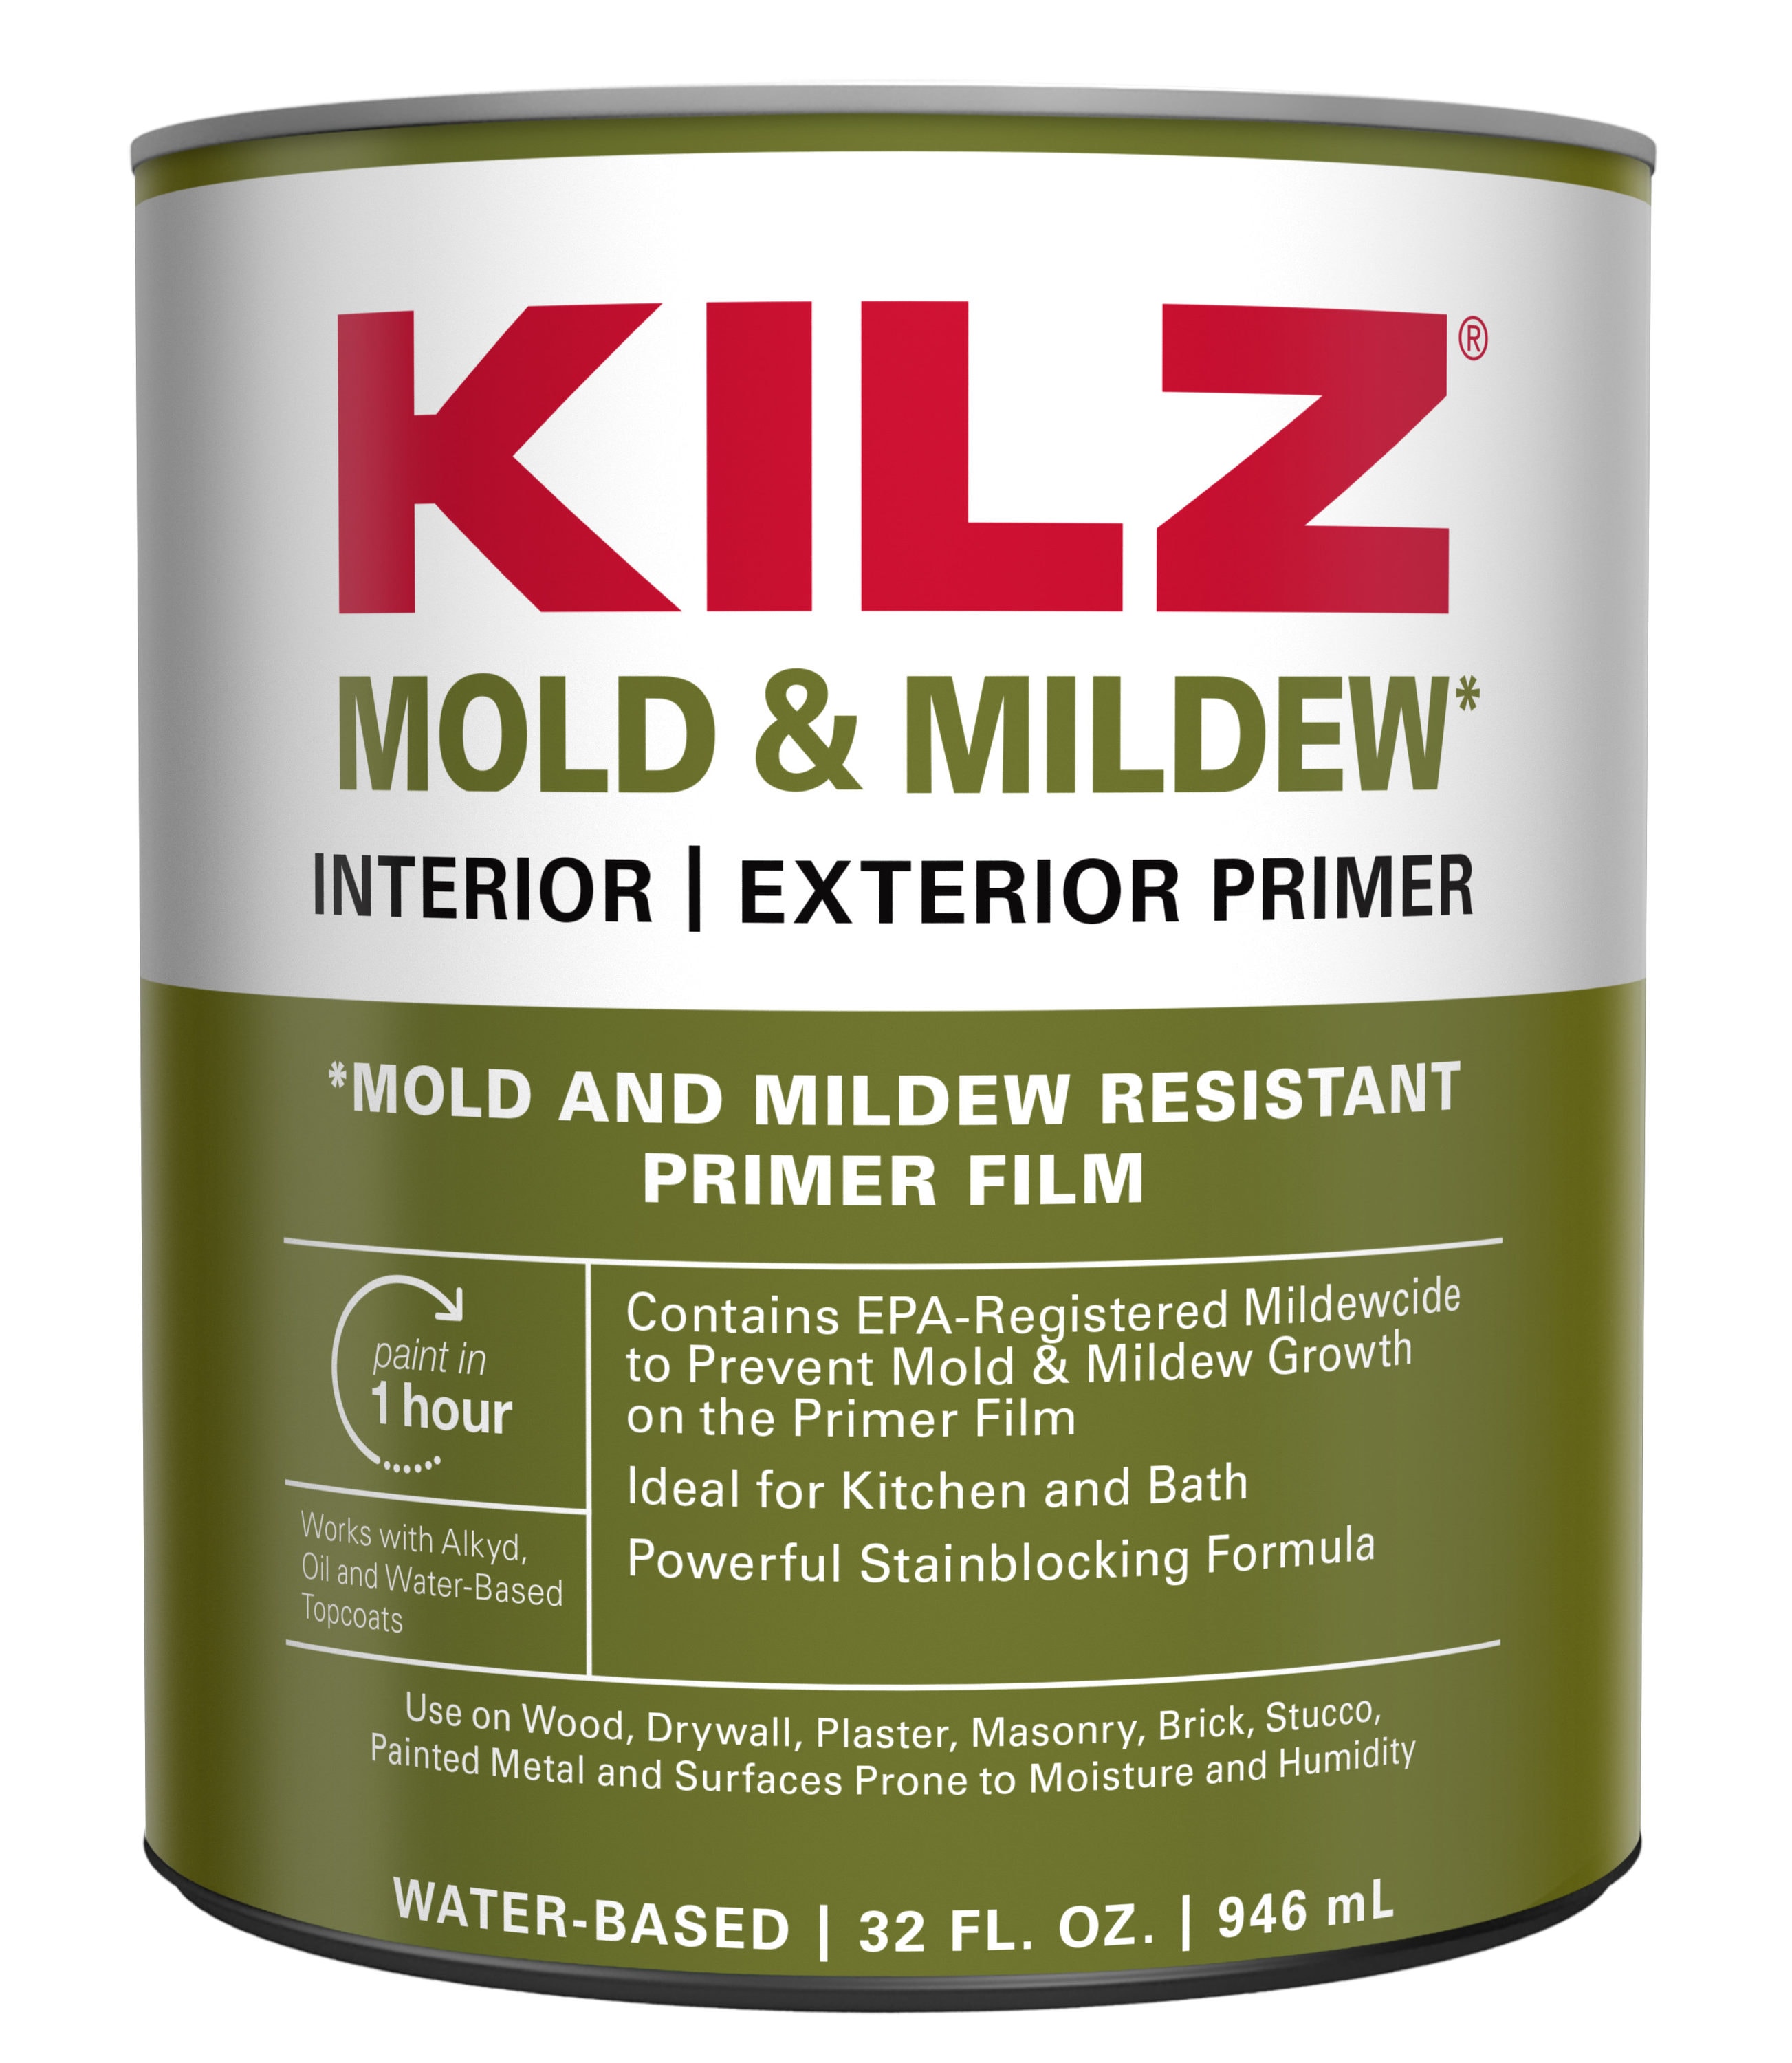 KILZ Original Interior Multi-purpose Oil-based Wall and Ceiling Primer  (1-Gallon) in the Primer department at